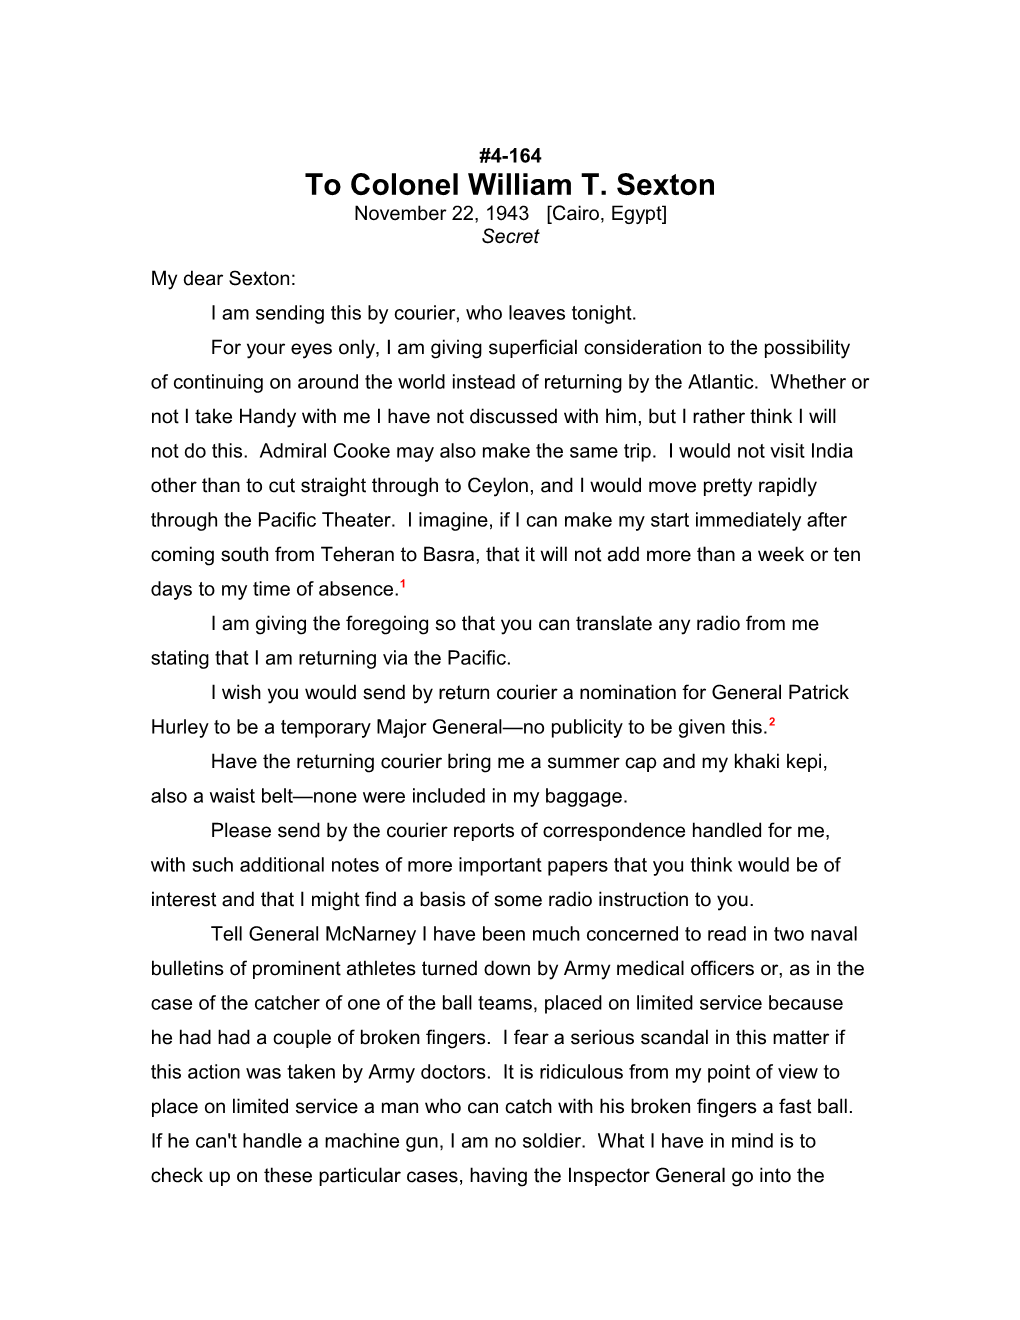 To Colonel William T. Sexton